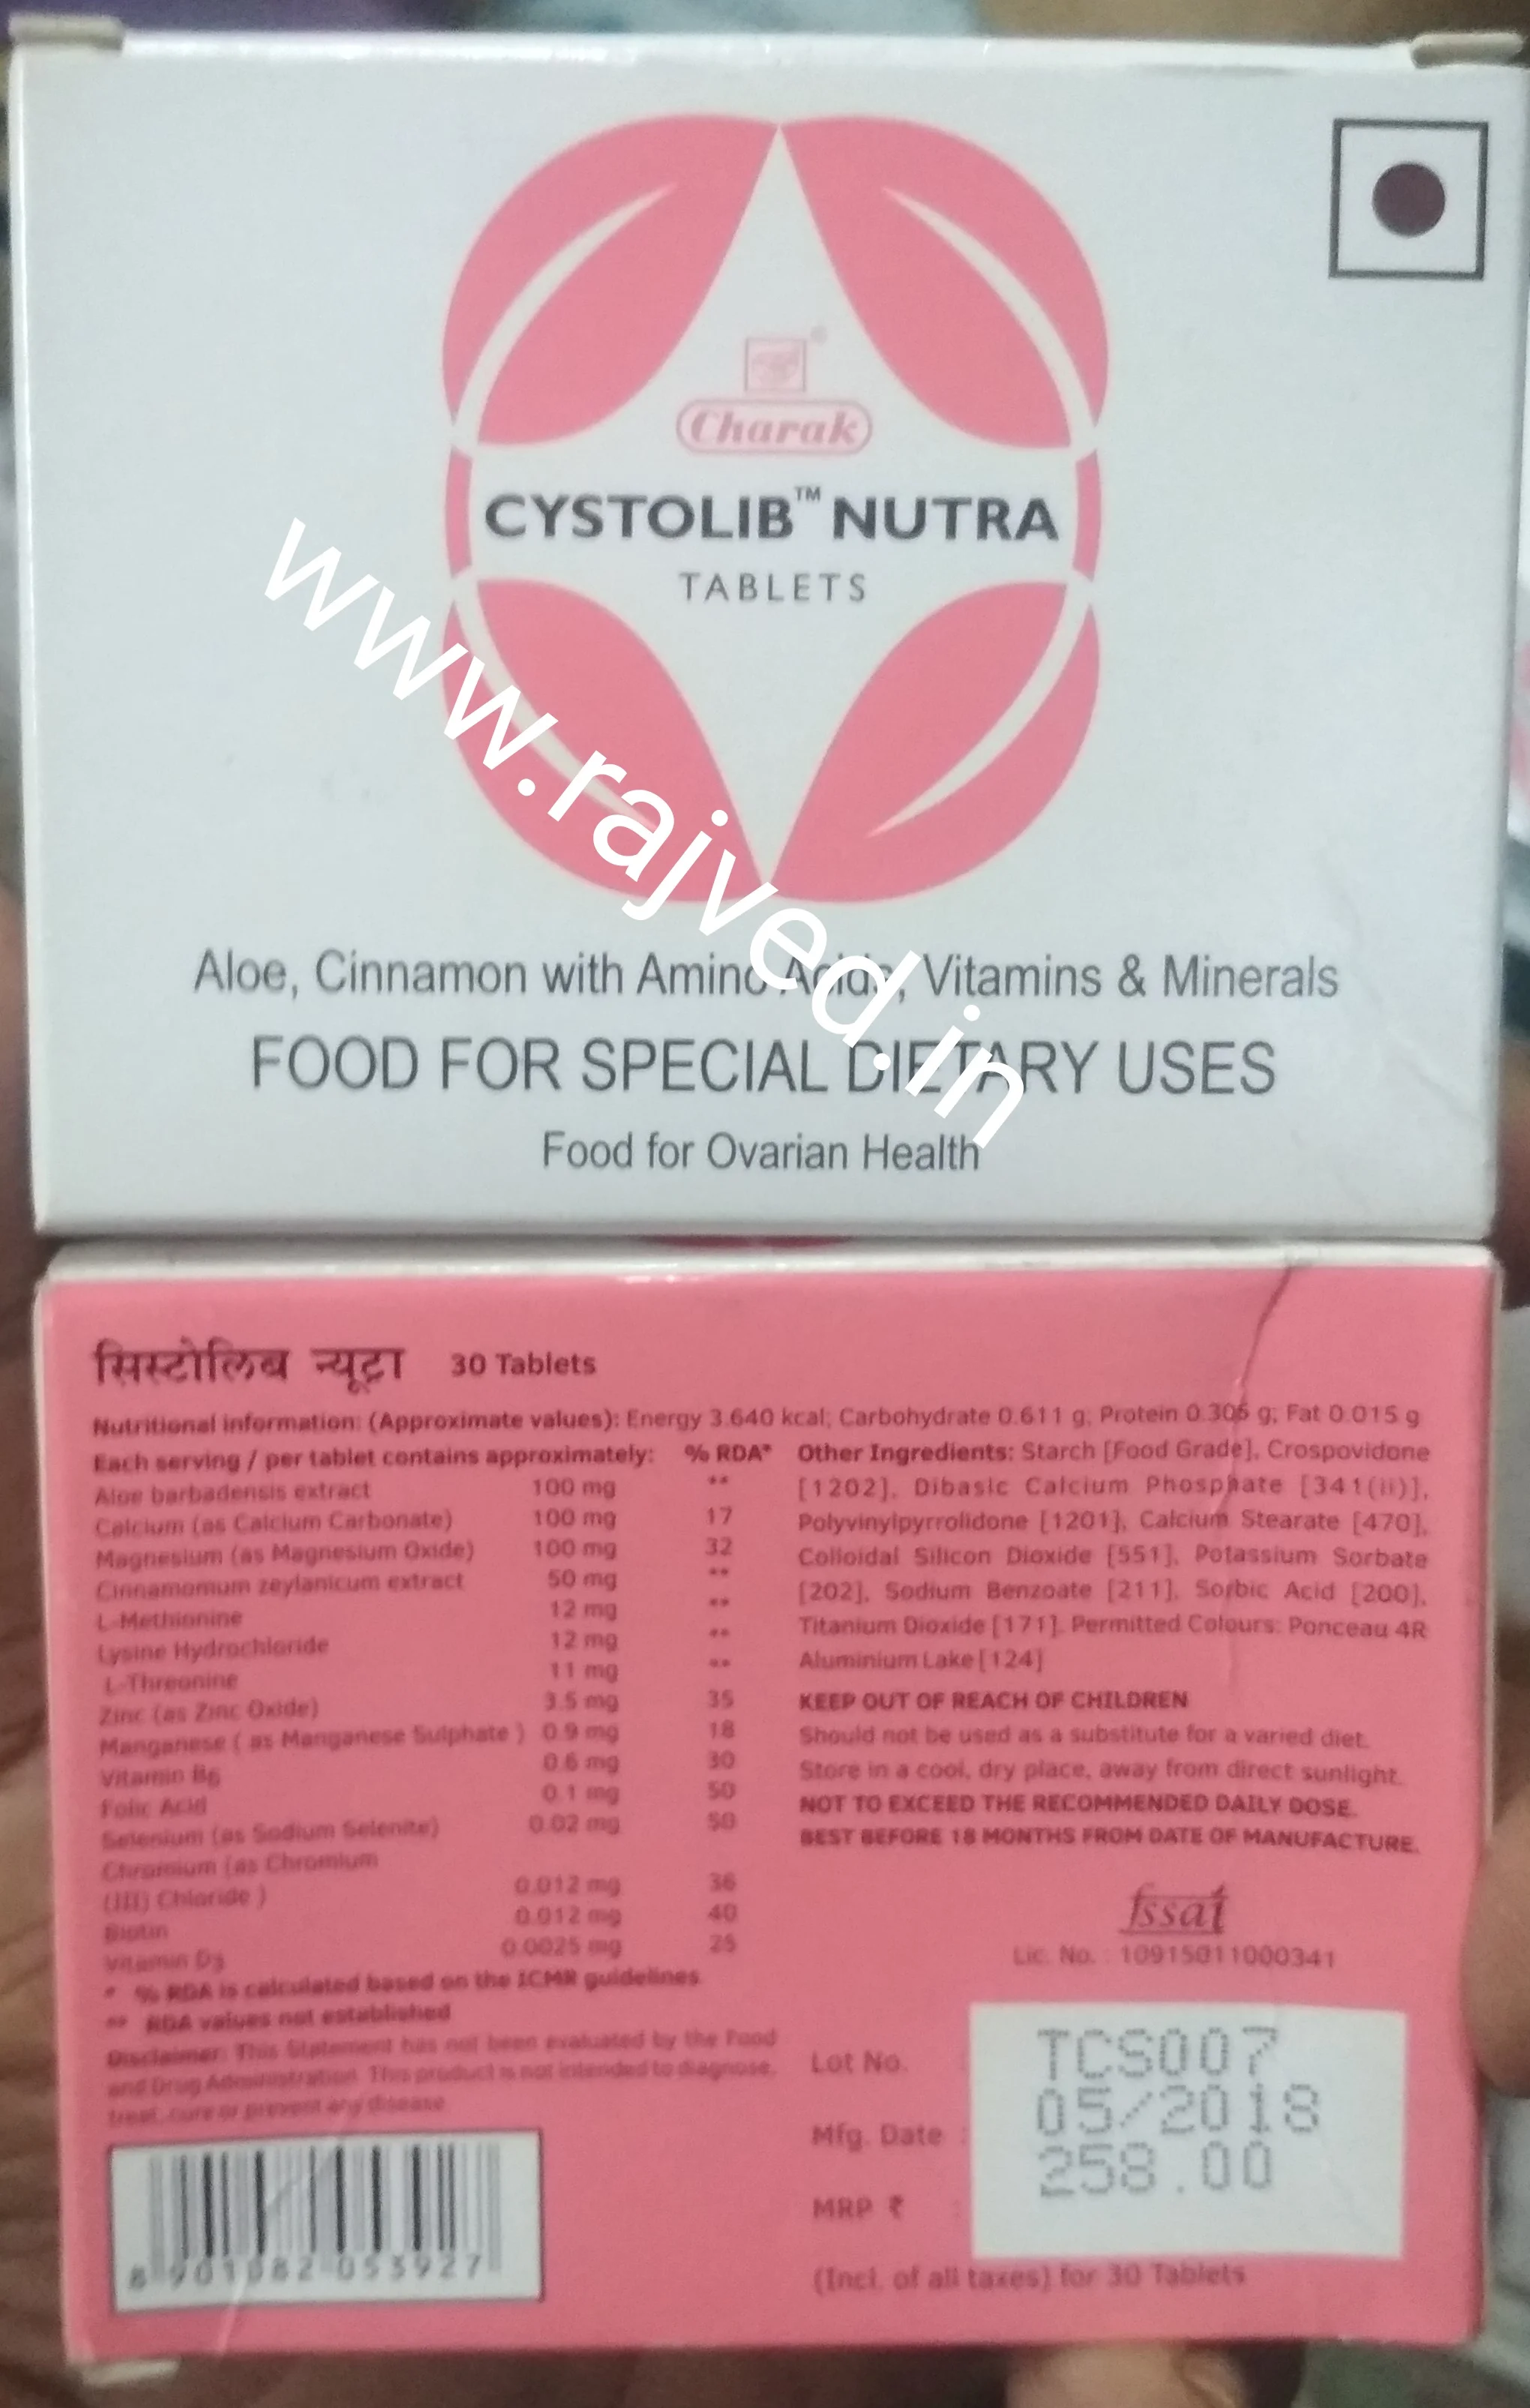 cystolib nutra 30tab upto 15% off charak pharma mumbai